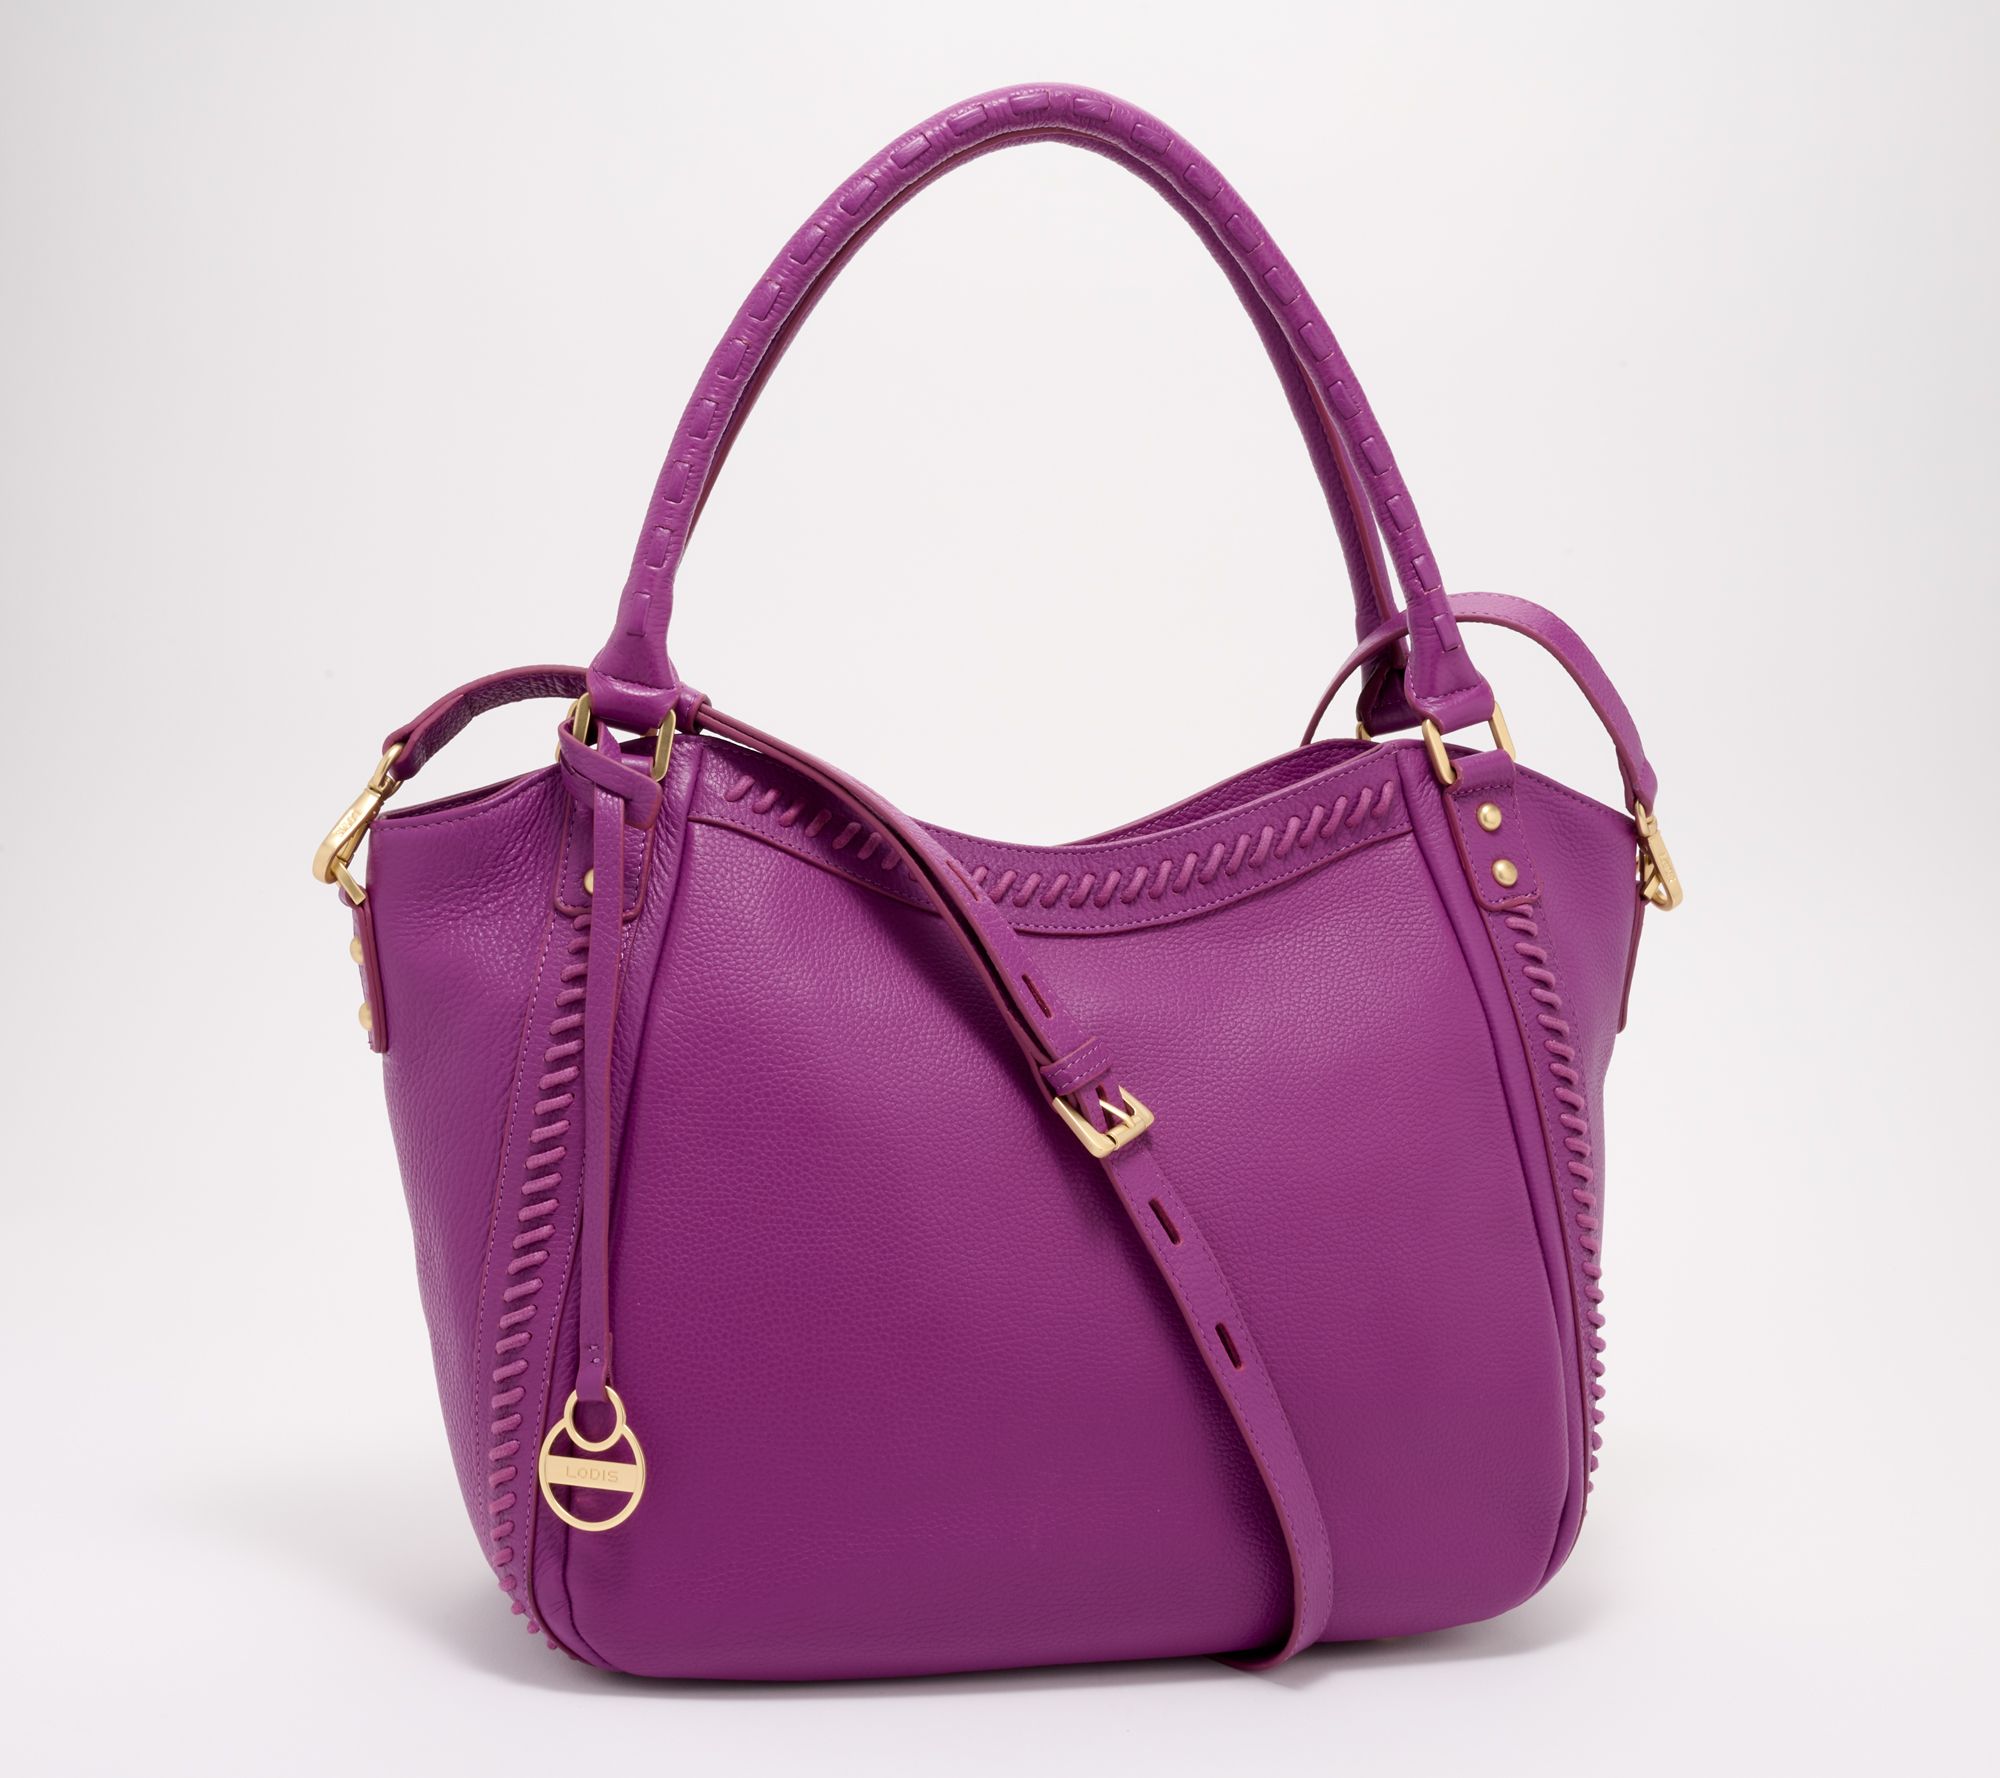 Louis Vuitton extra large shopping bag 19 x 15 x 5 XL